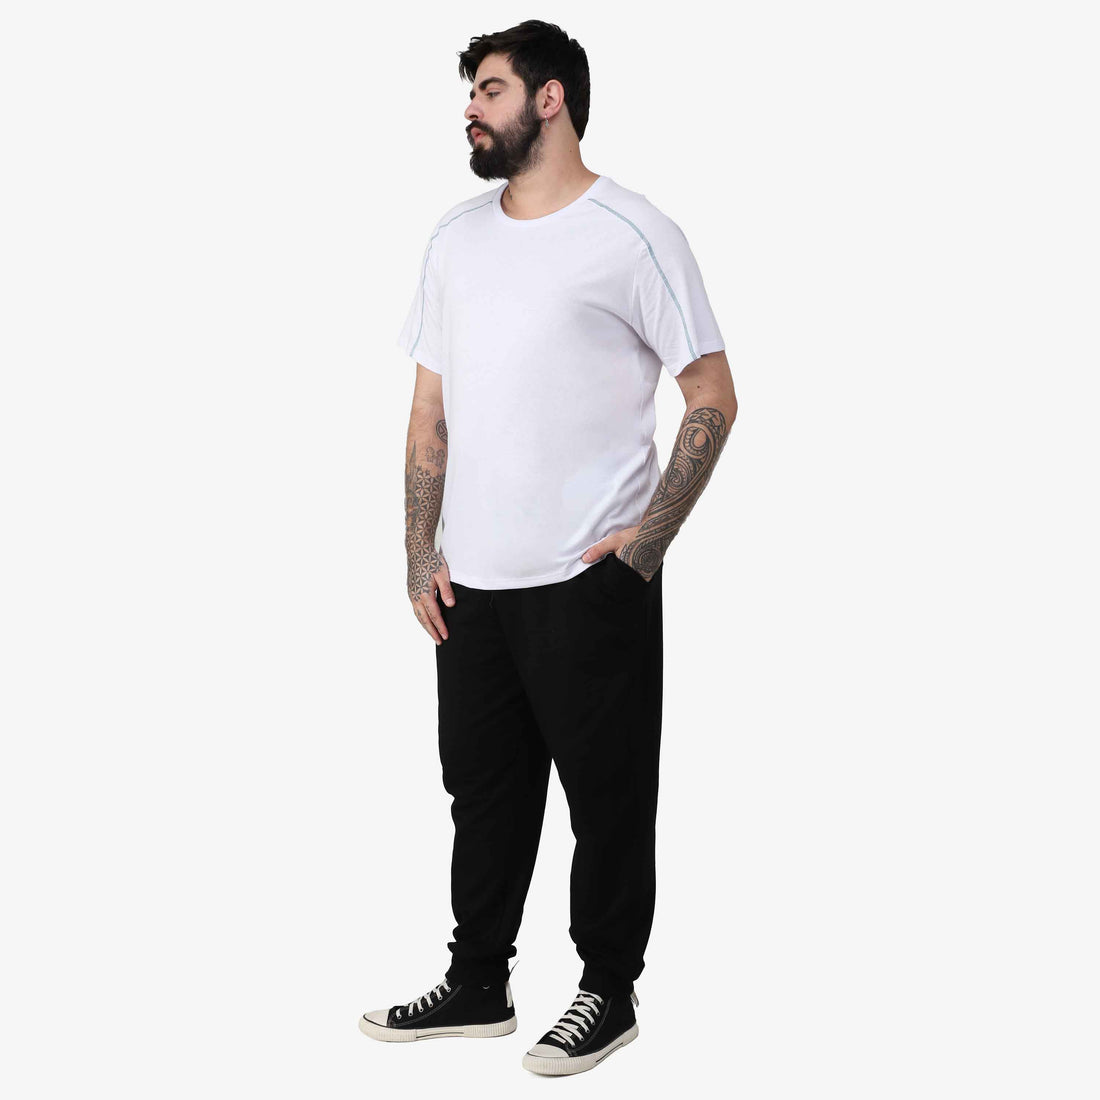 Tech T-Shirt Contraste Impermeável Plus Masculina - Branco